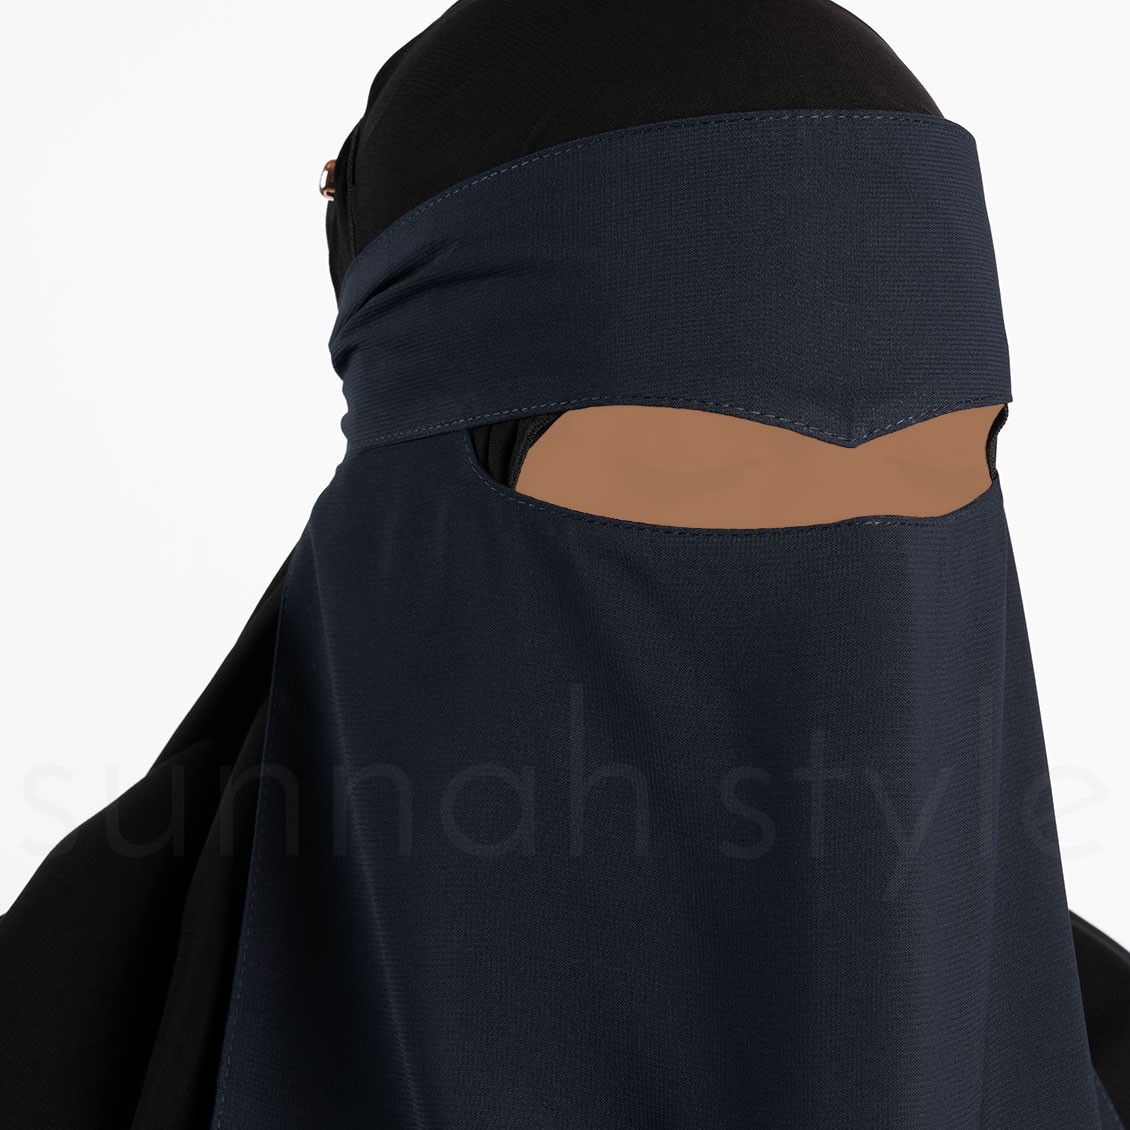 Sunnah Style One Layer Widows Peak Niqab Navy Blue